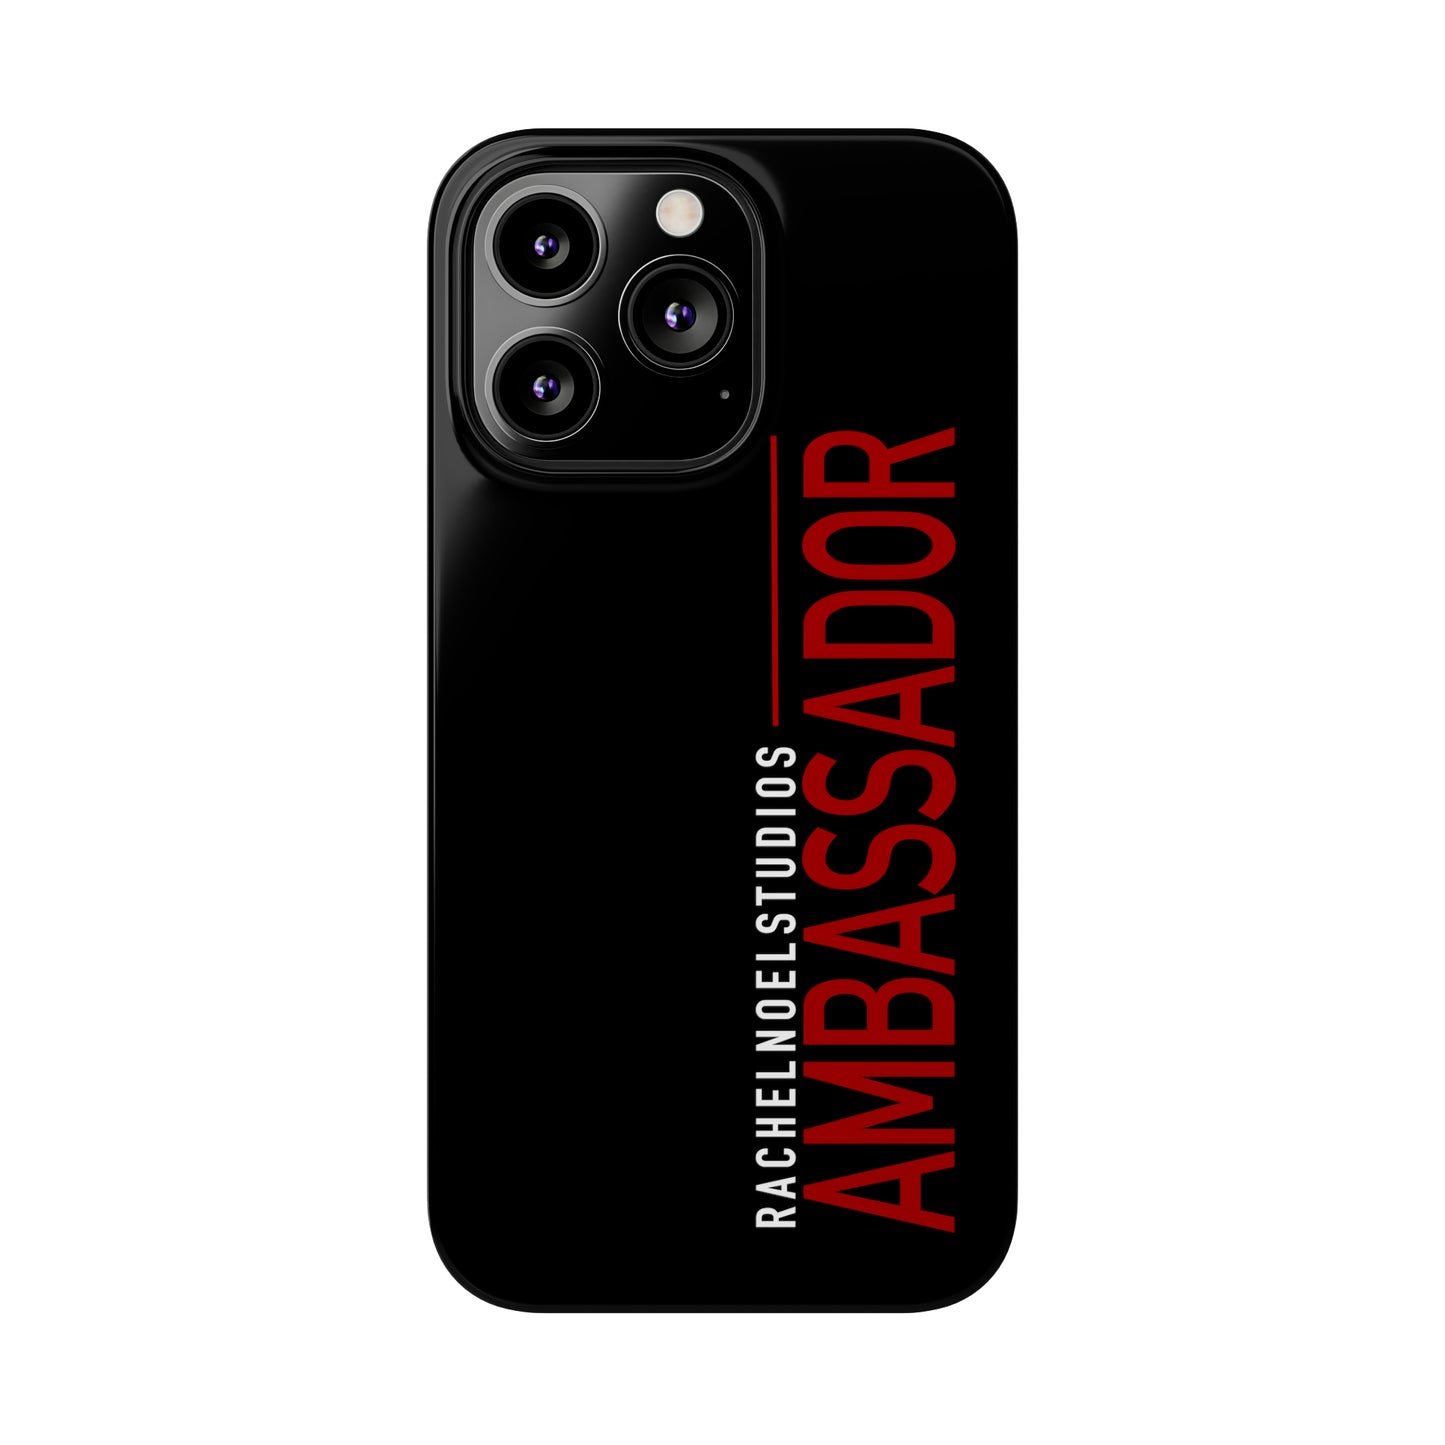 “Ambassador” RNS Phone Cases